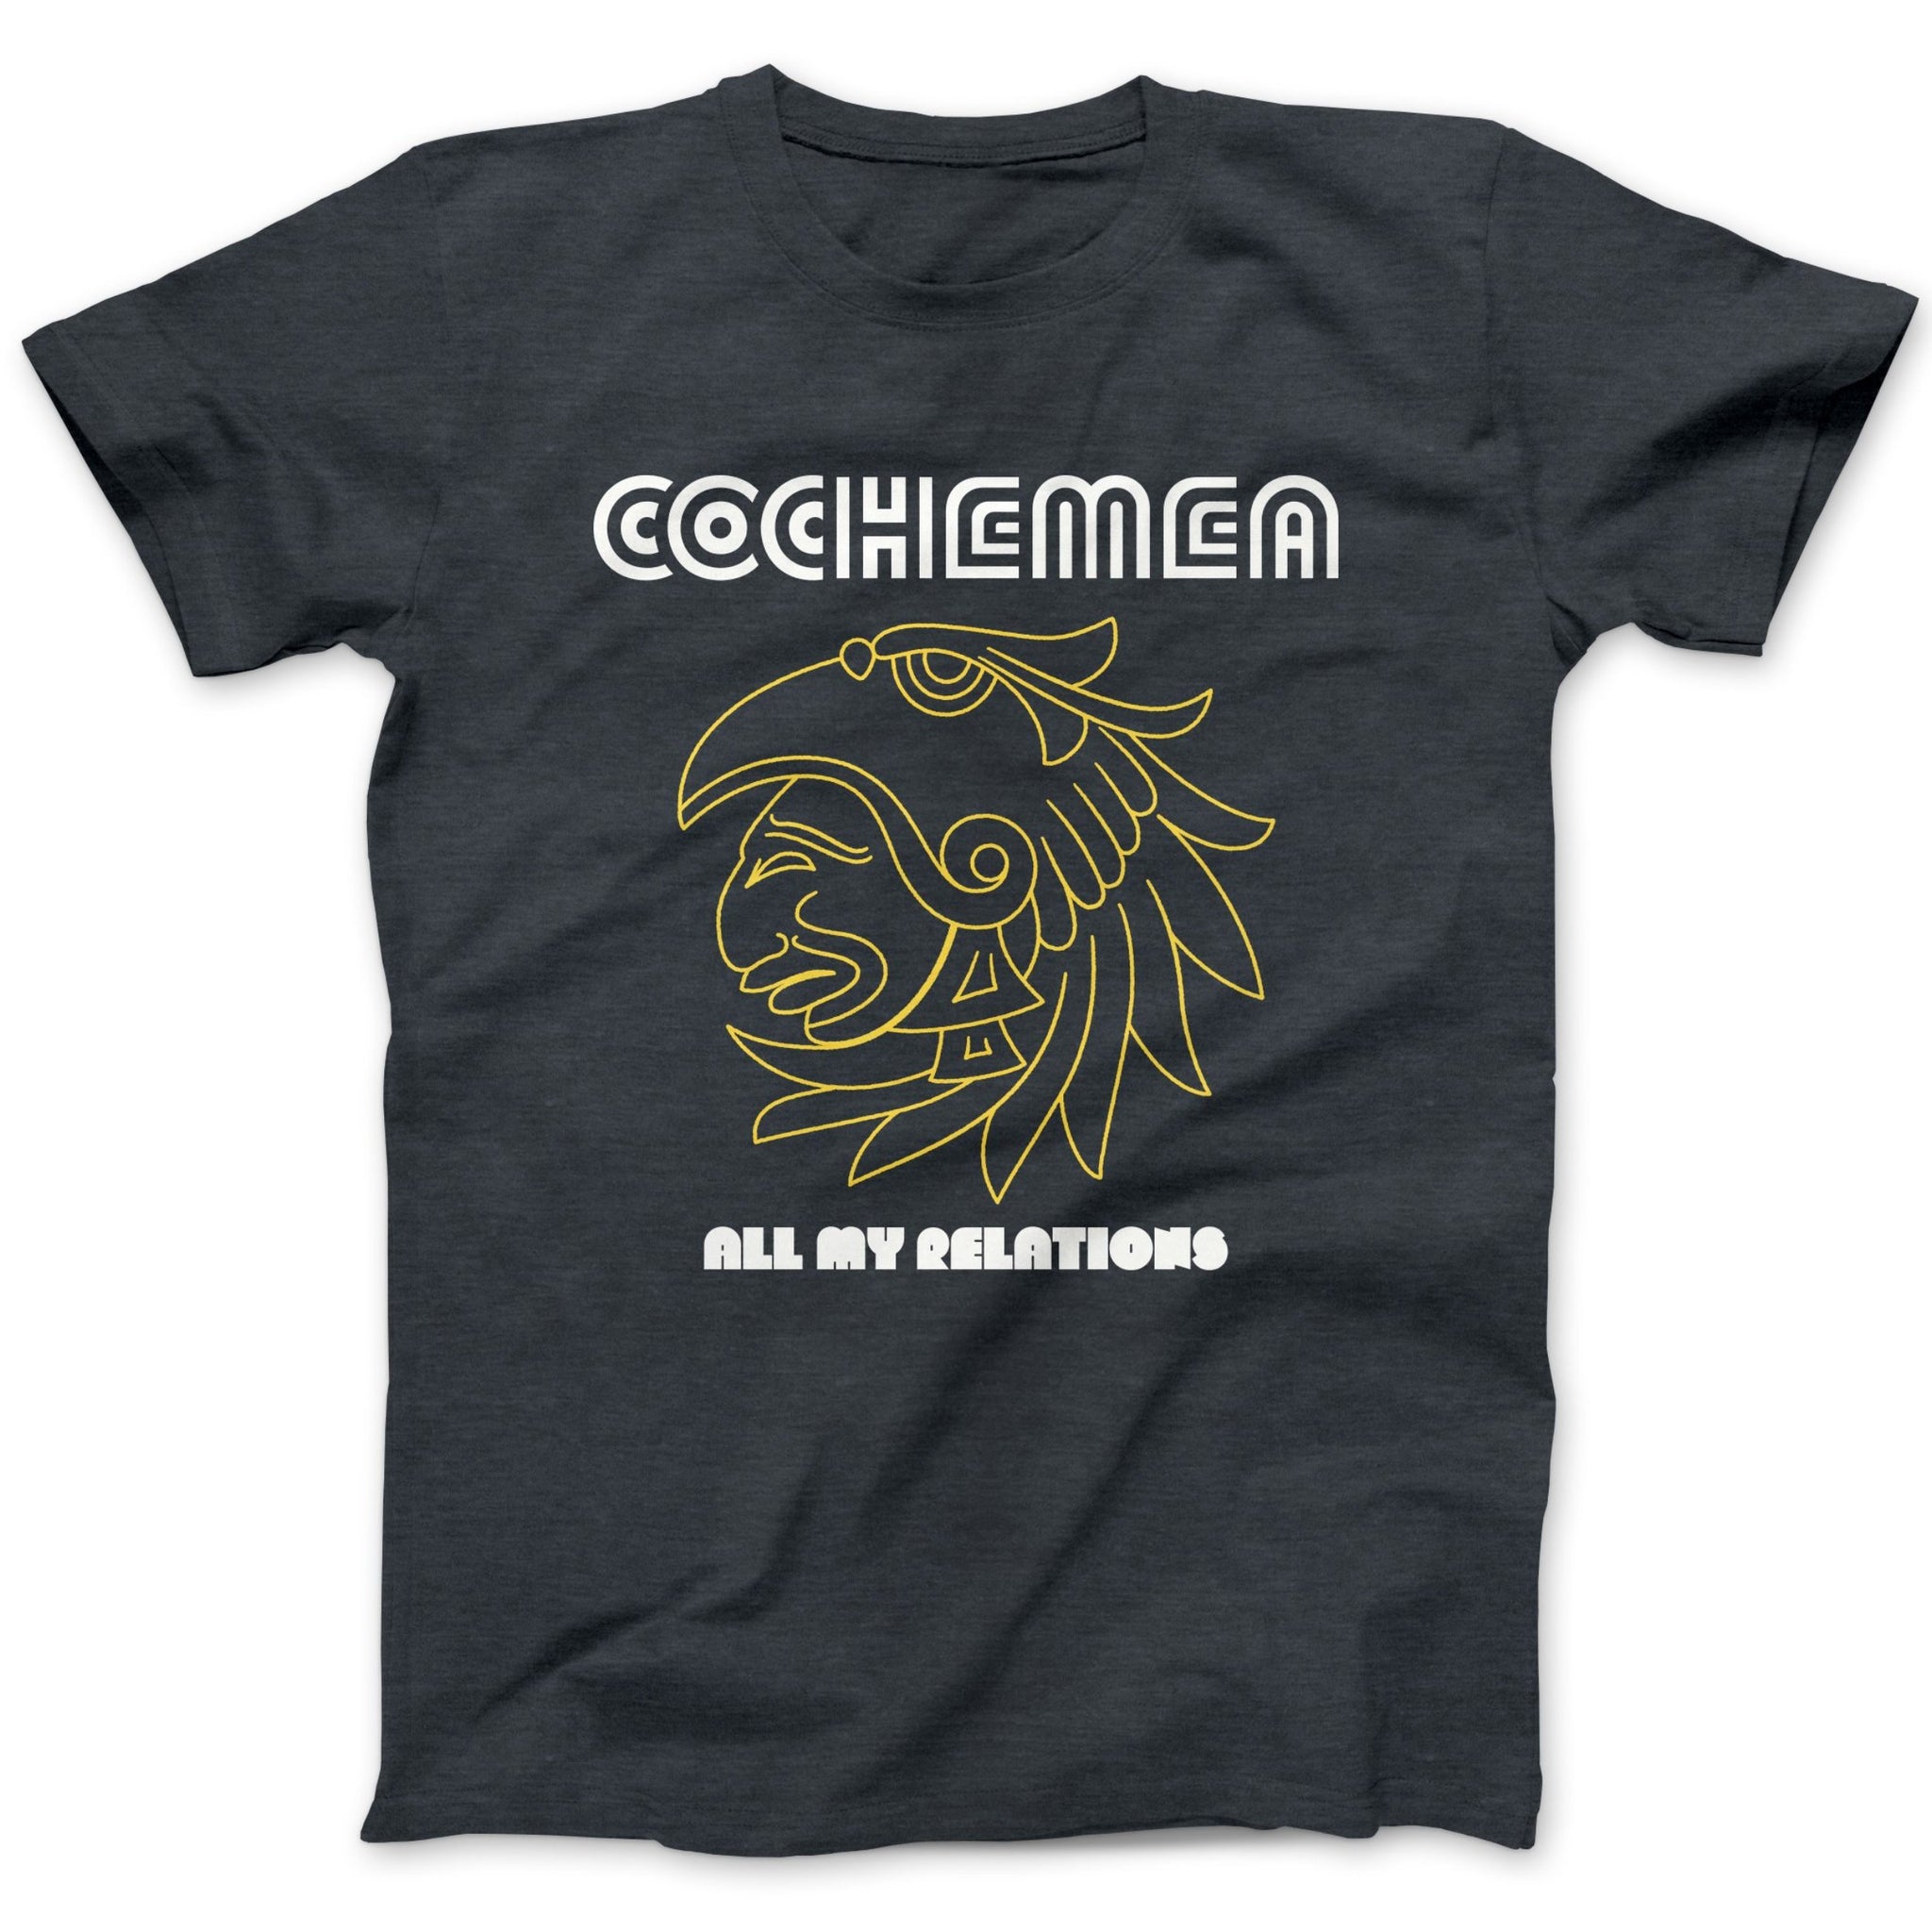 Cochemea "All My Relations" T-Shirt